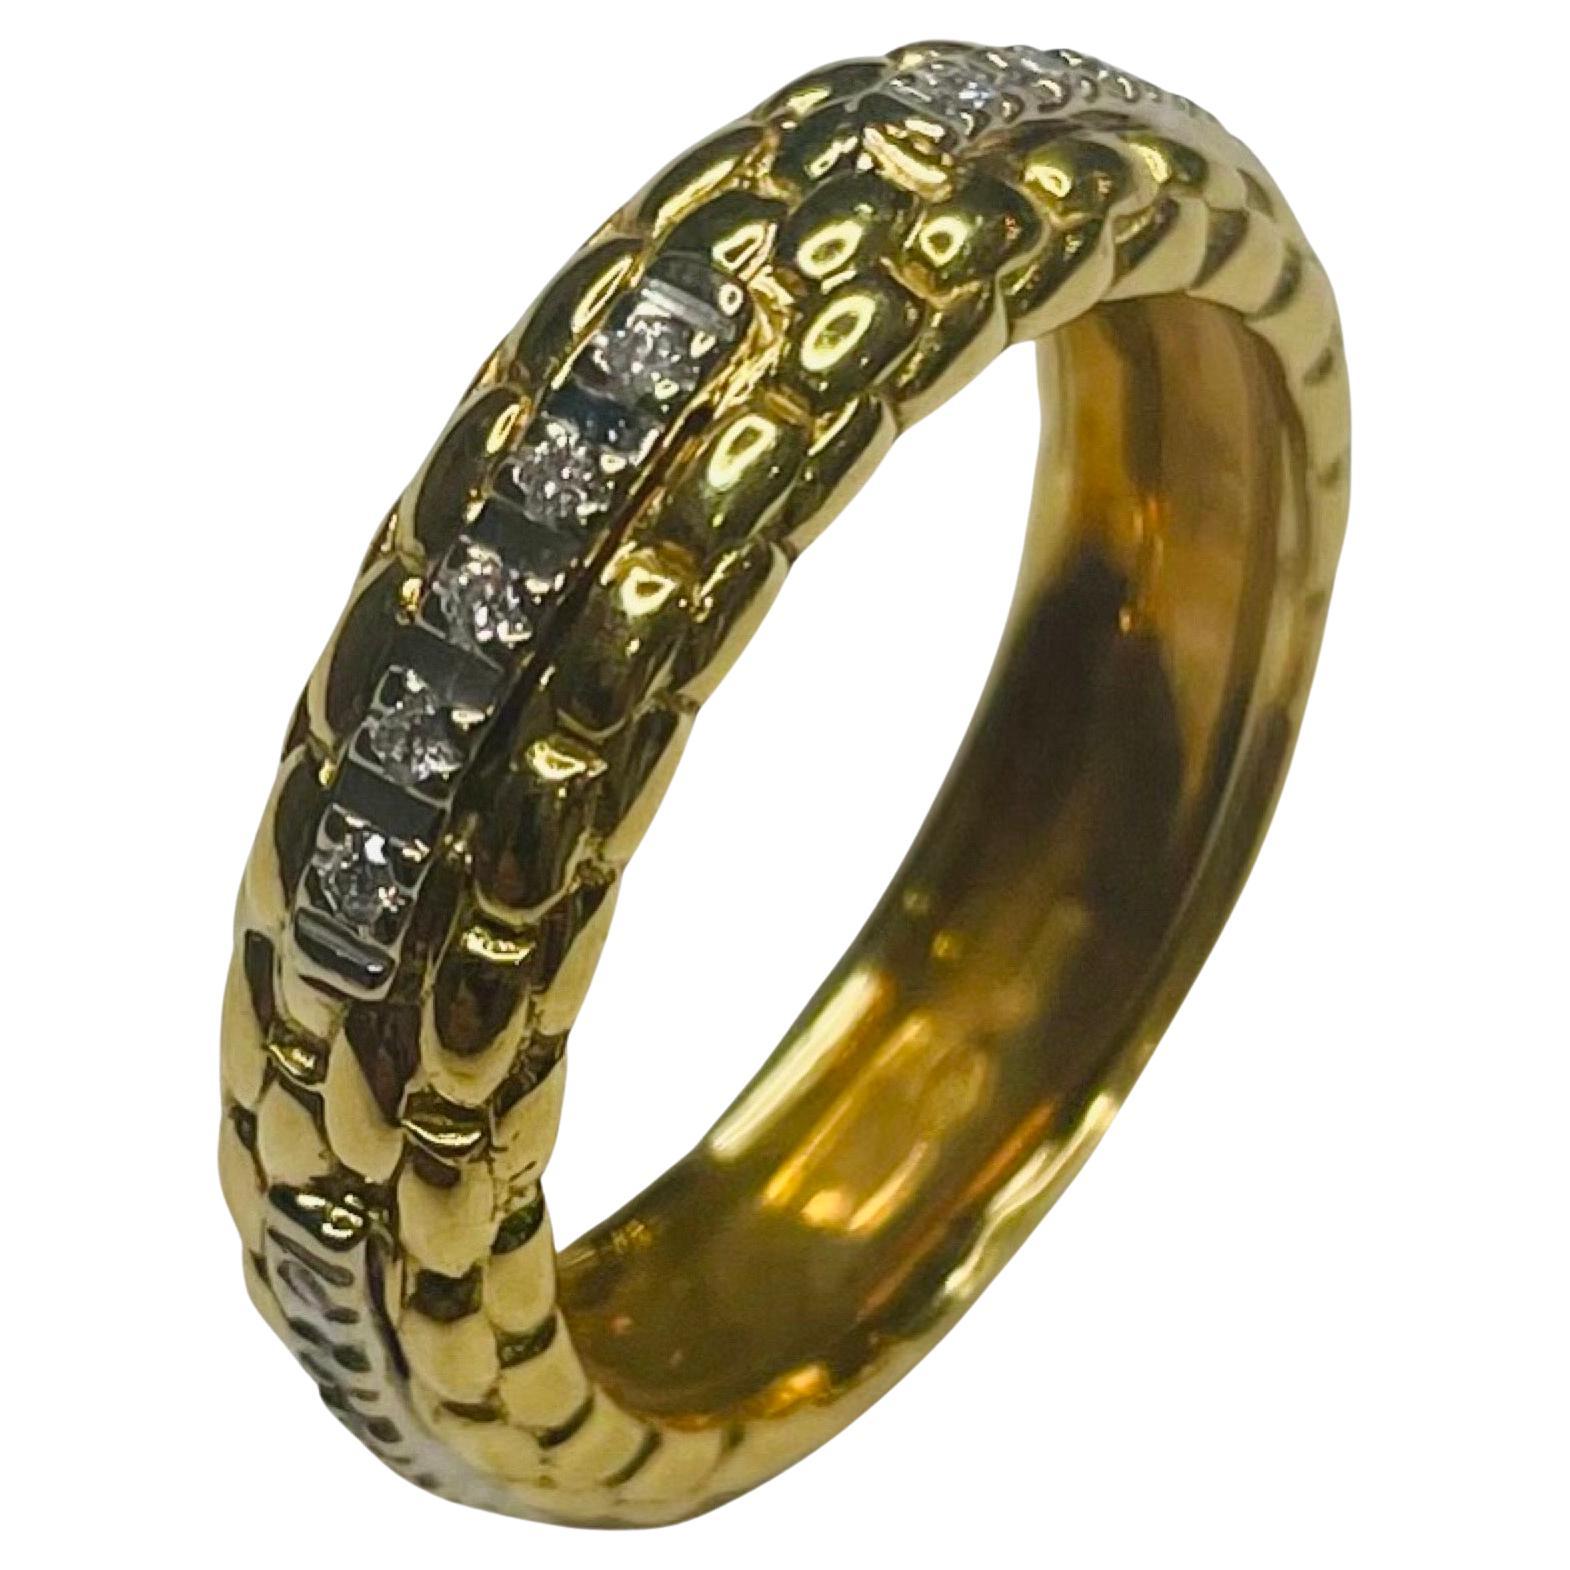 Fope 18K Yellow & White Gold and Diamond "Lucrezia" Ring